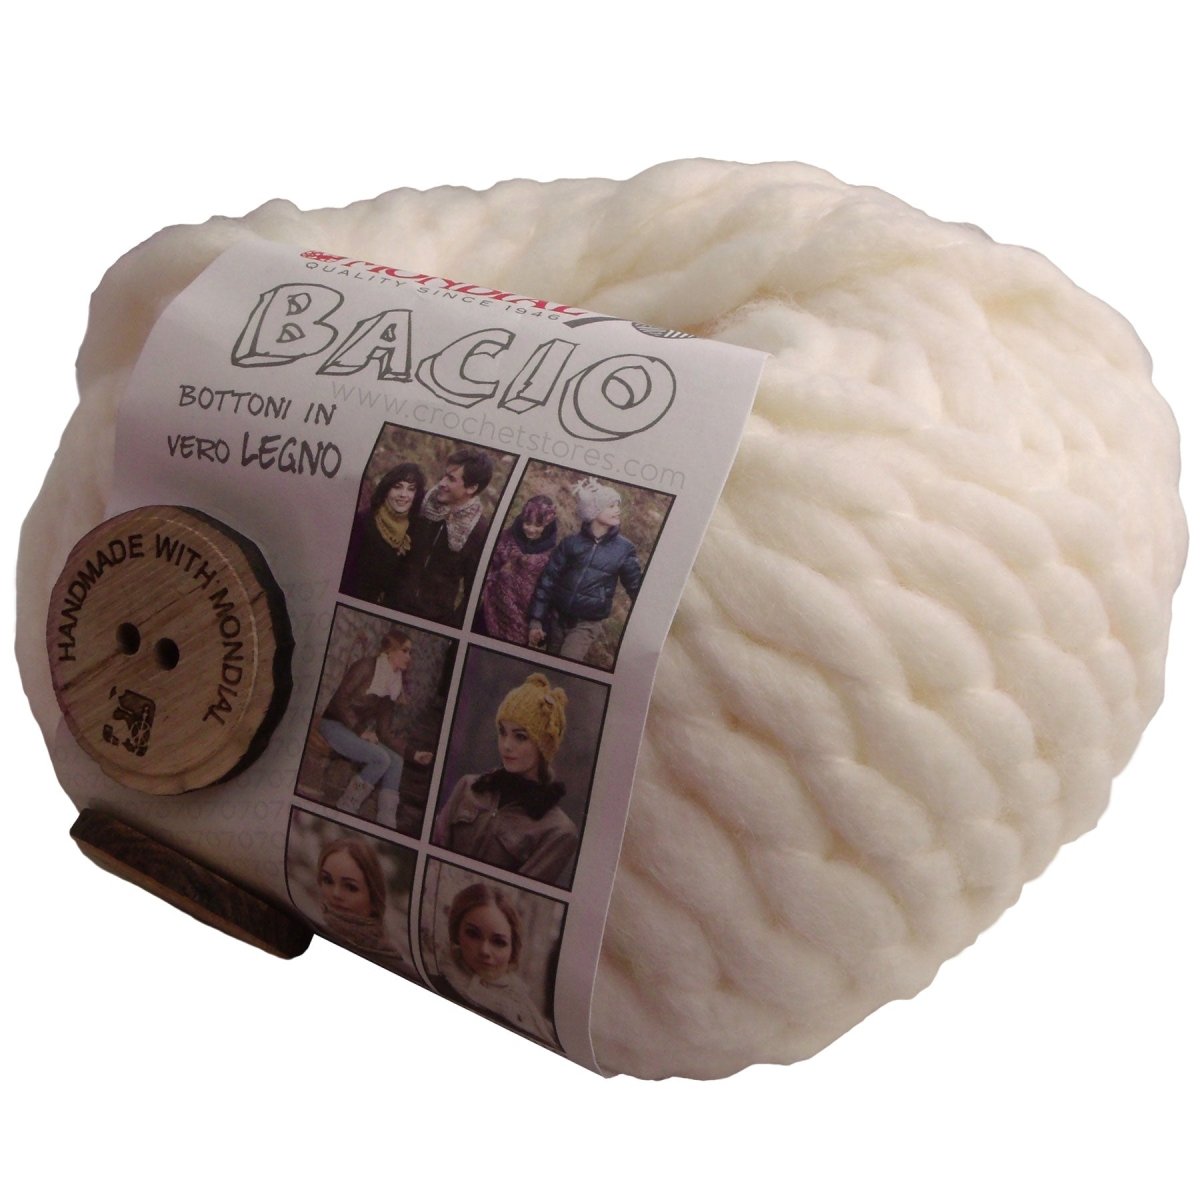 BACIO - Crochetstores12019838020586411351